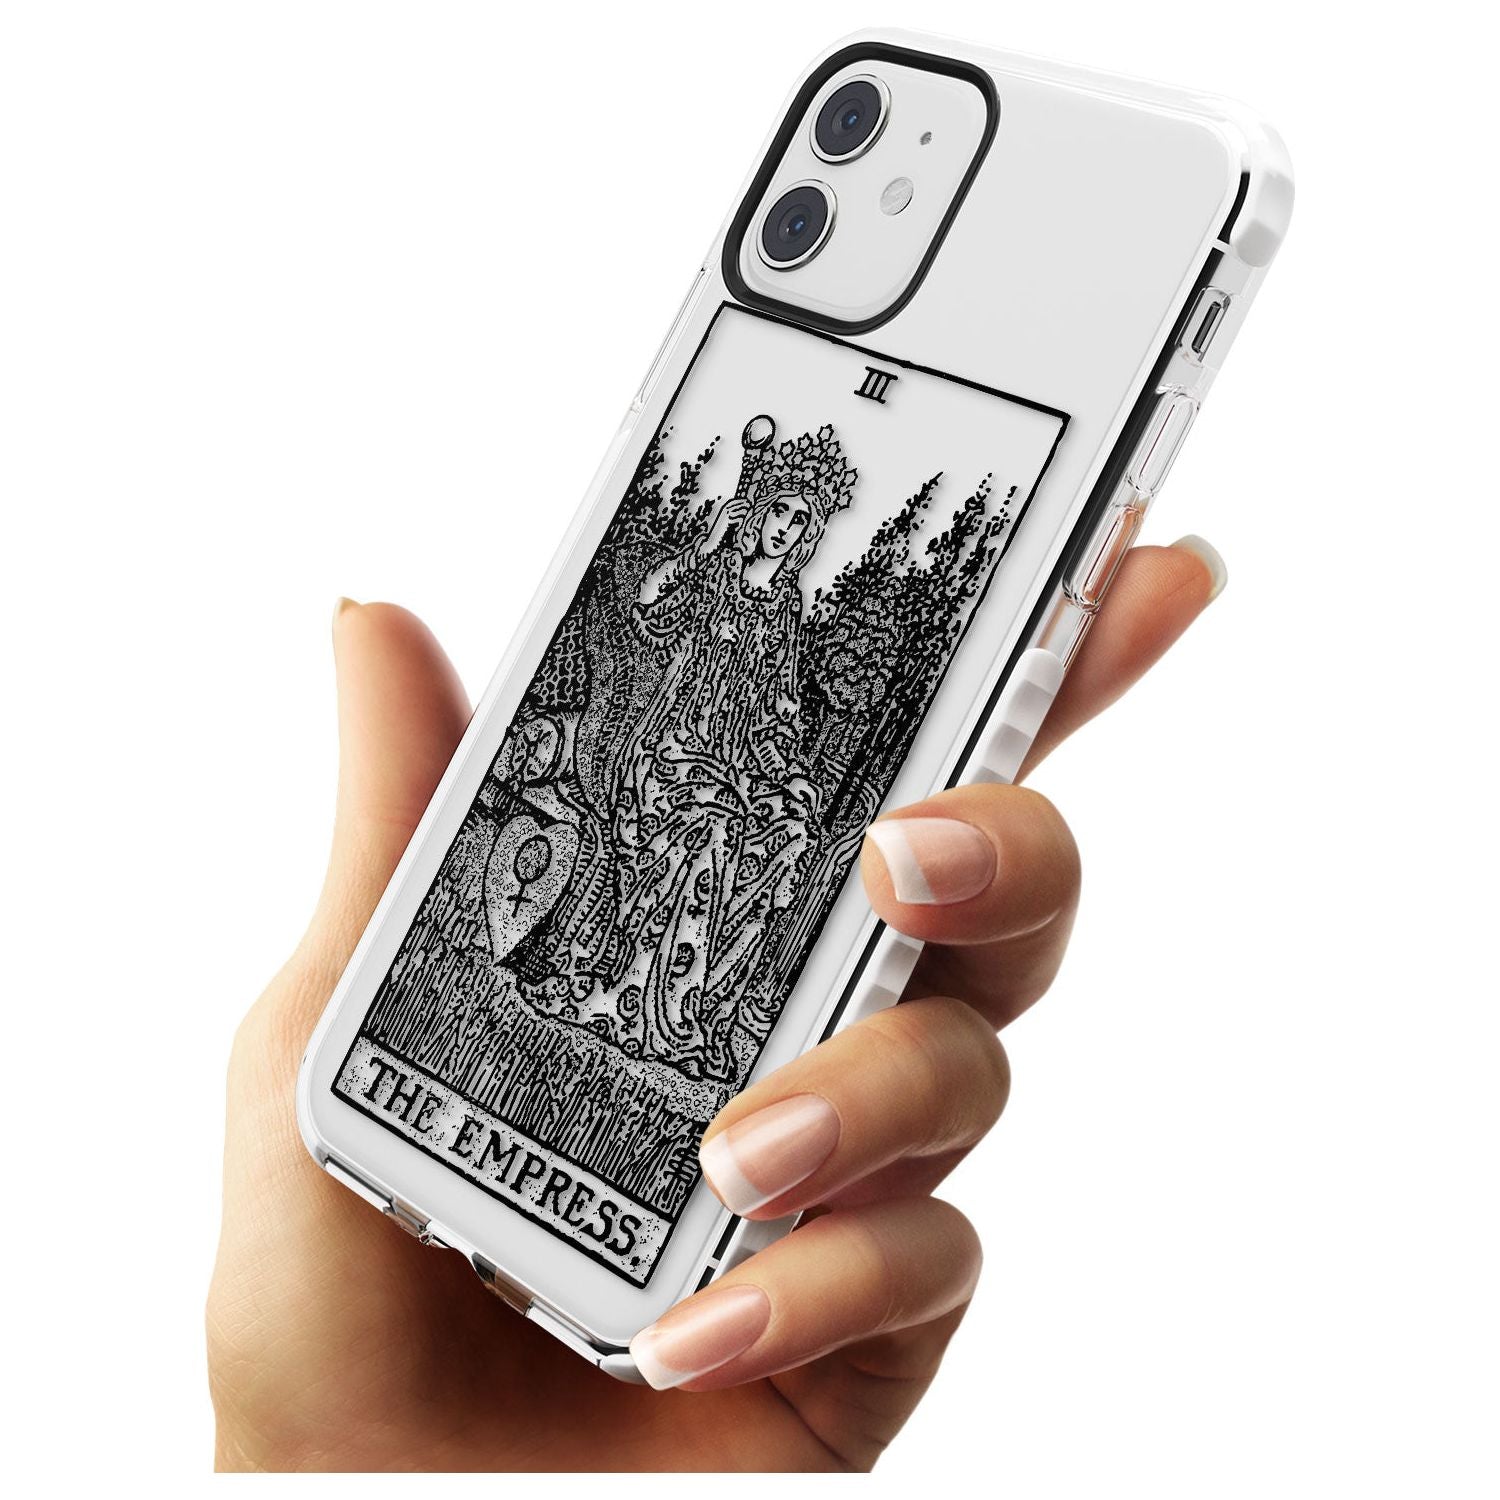 The Empress Tarot Card - Transparent Slim TPU Phone Case for iPhone 11